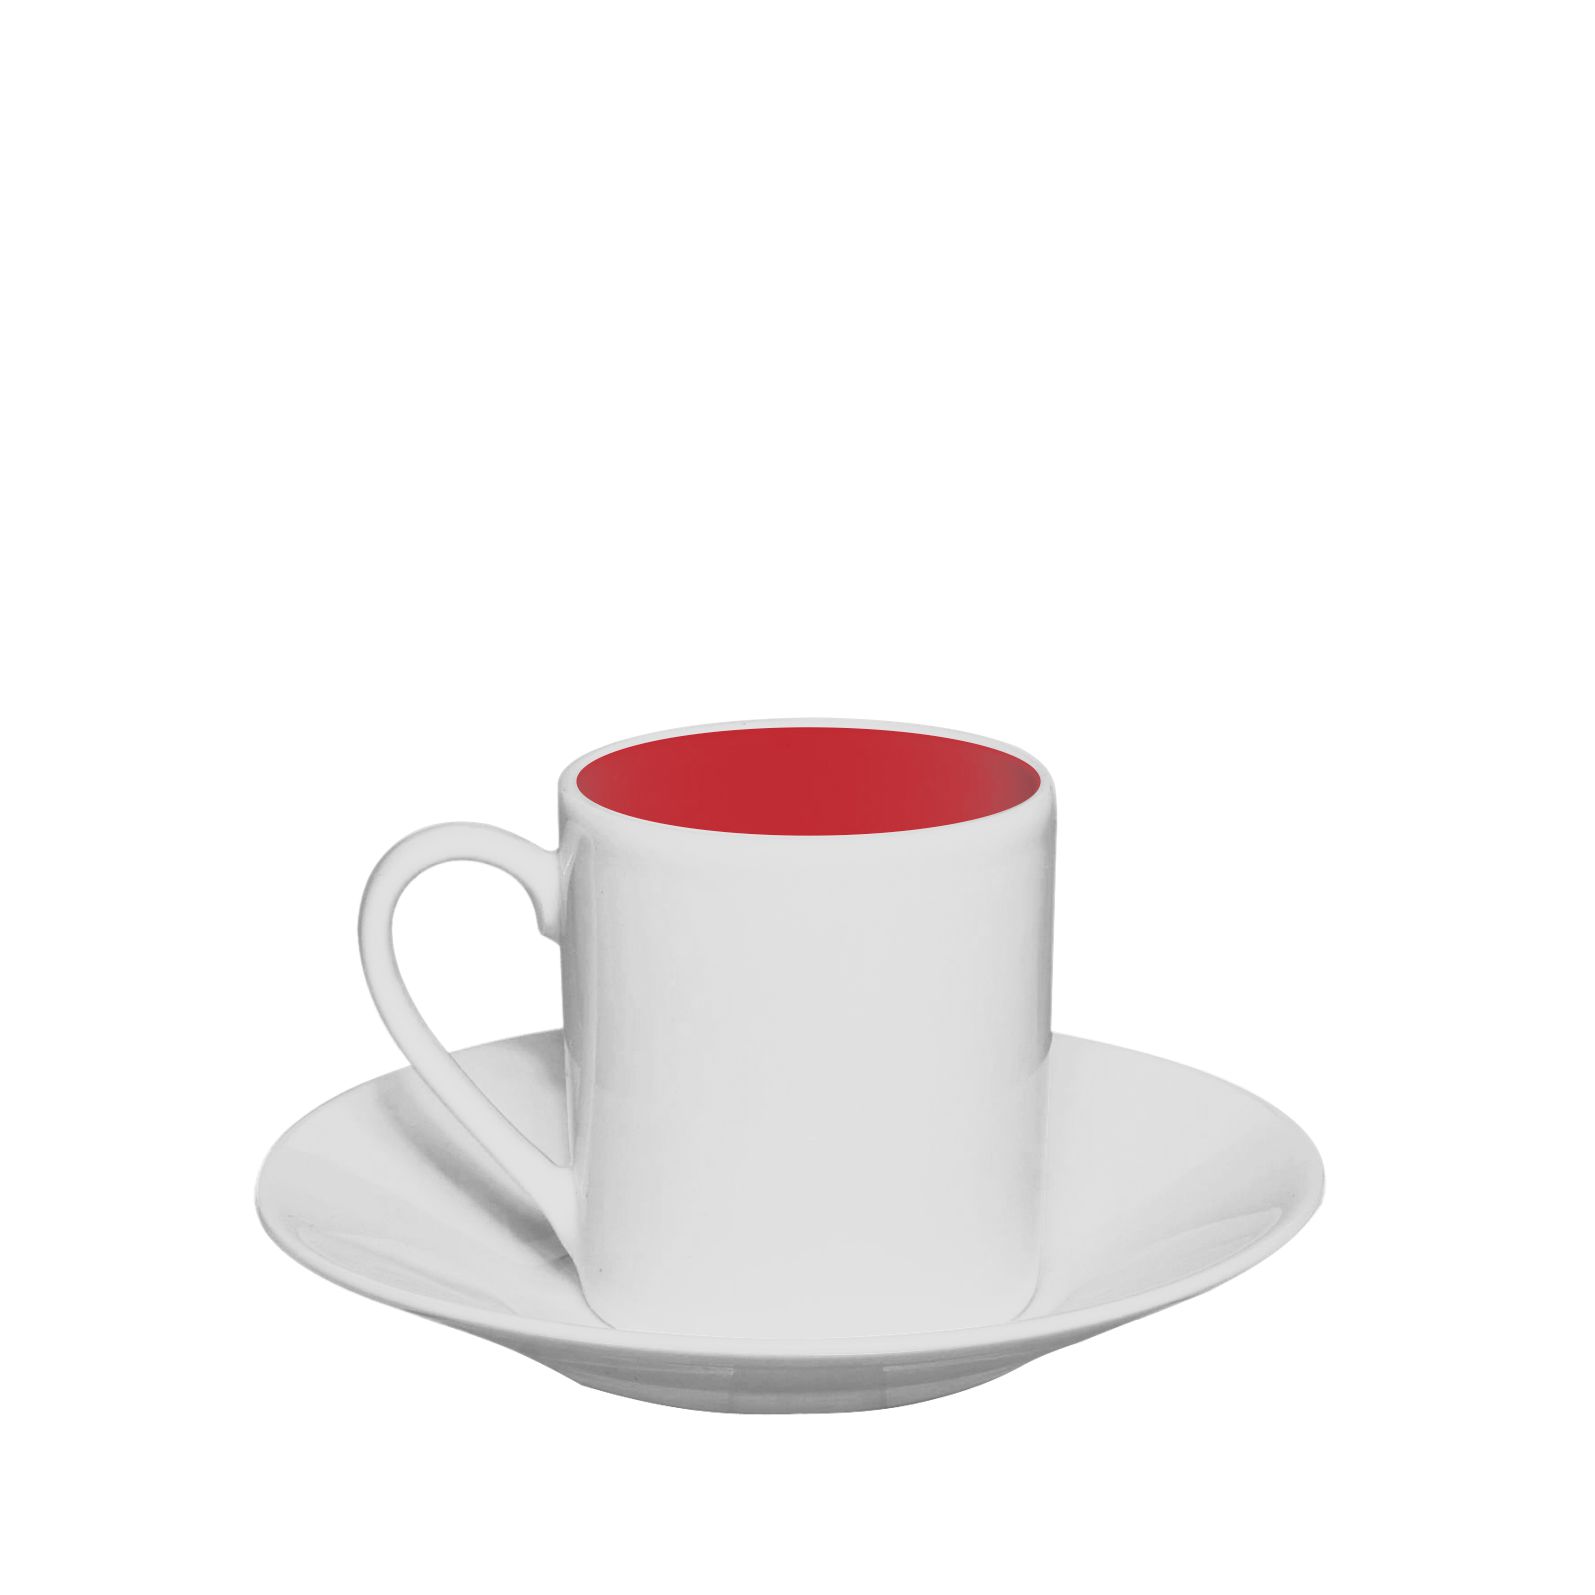 /sites/default/files/2020-03/Fili%C5%BCanka_classic_espresso_white-red.jpg